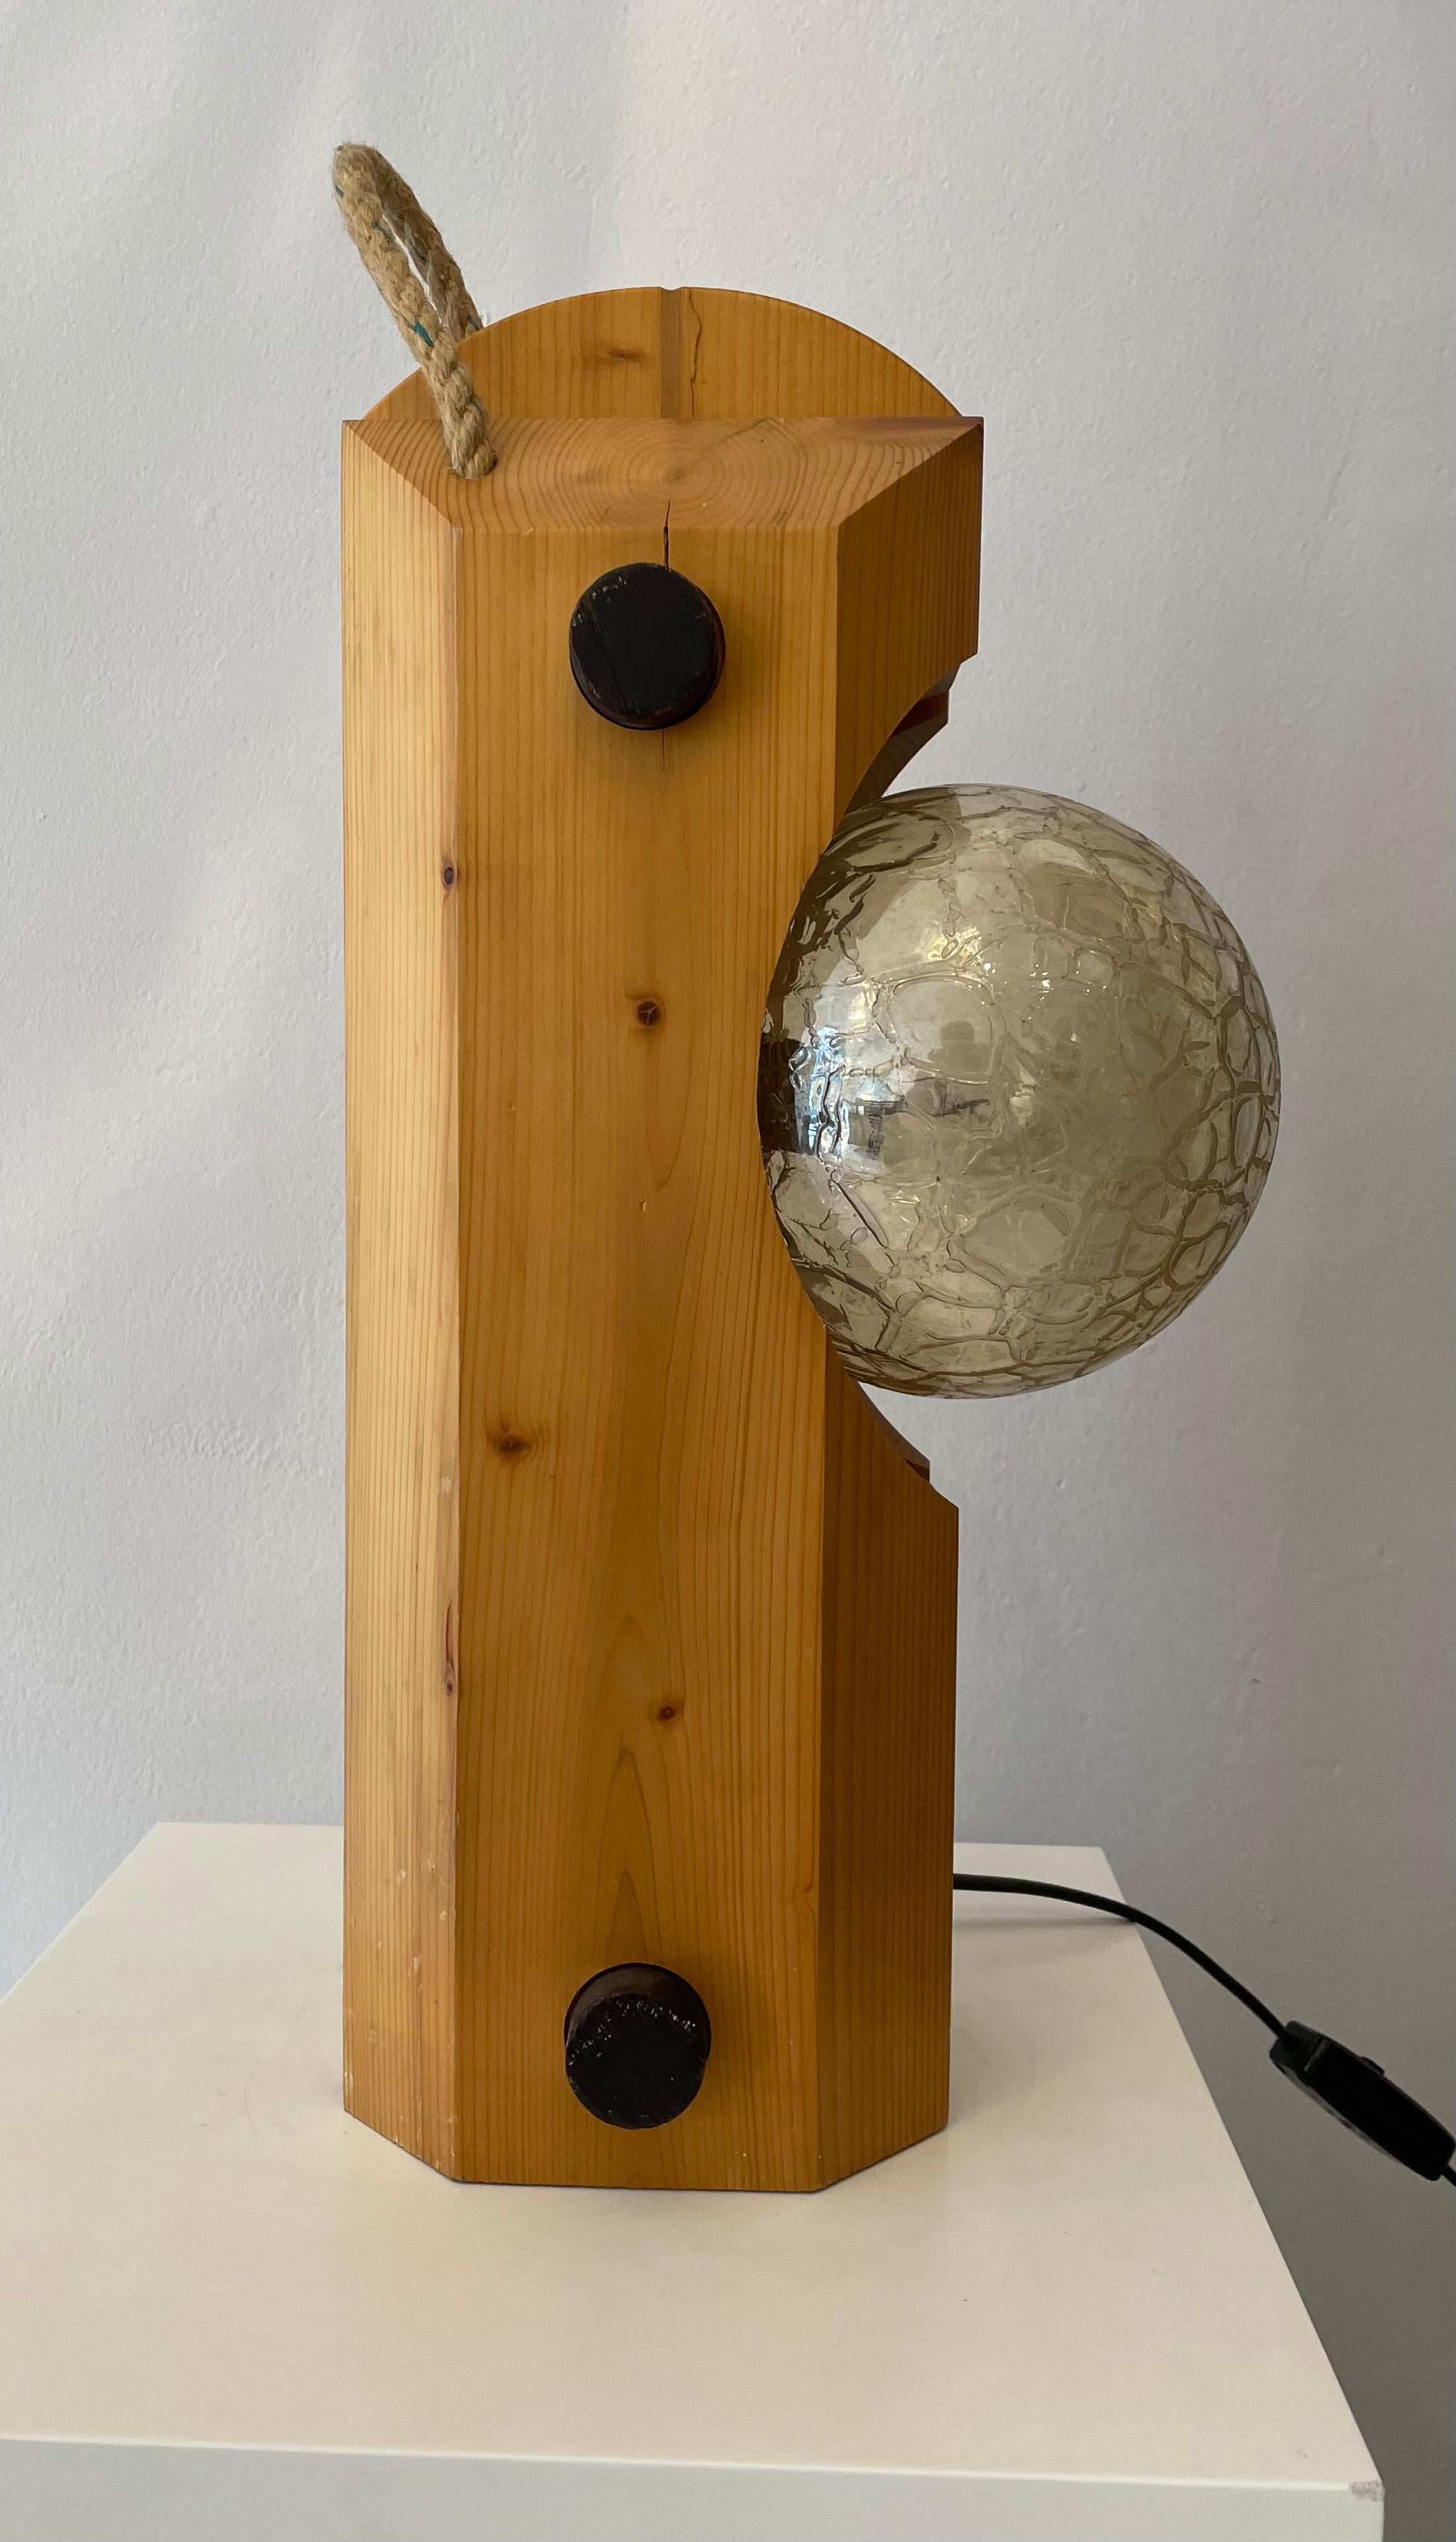 Wooden table lamp by Temde Leuchten - Germany 1970s.